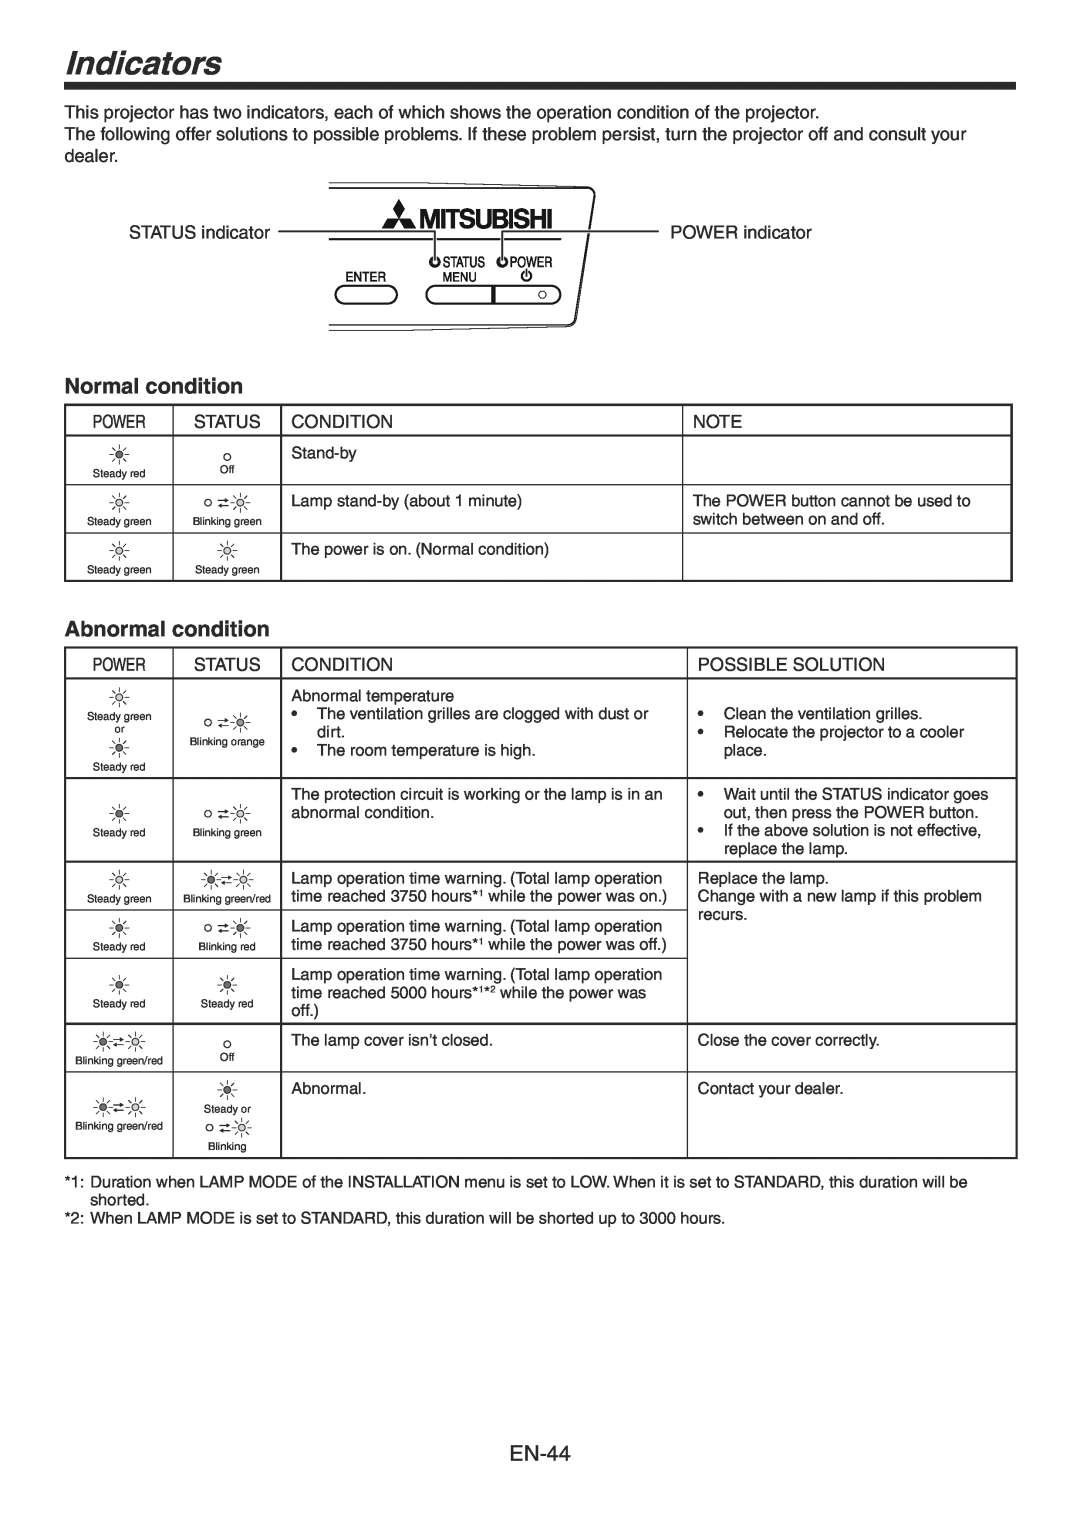 Mitsubishi Electronics HC3800 user manual Indicators, Normal condition, Abnormal condition 